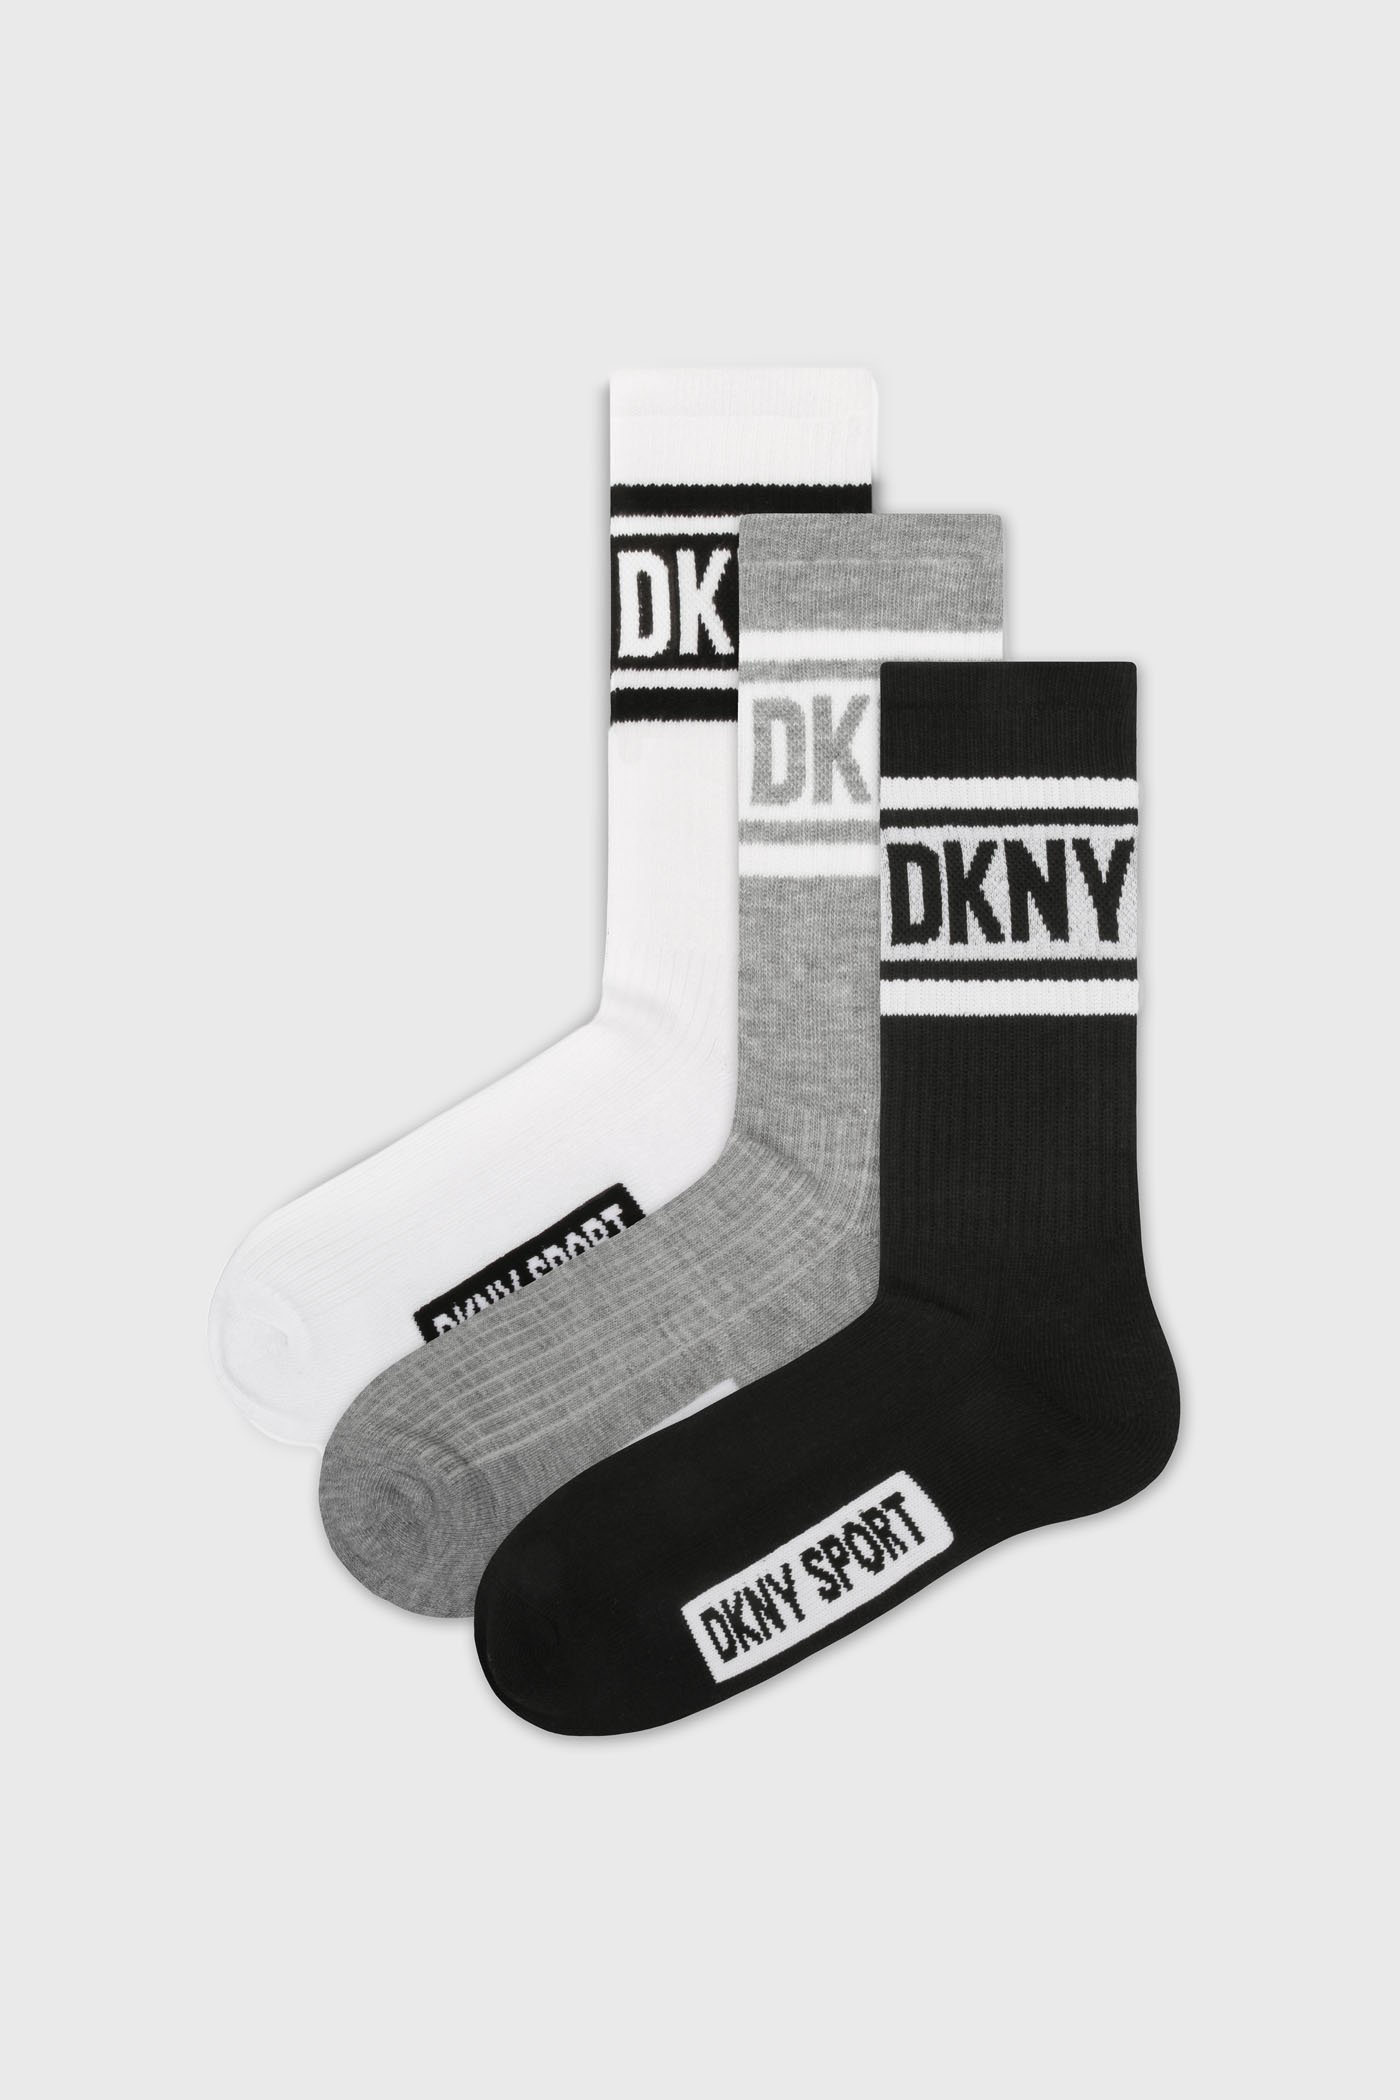 3 PACK κάλτσες DKNY Reed | Astratex.gr